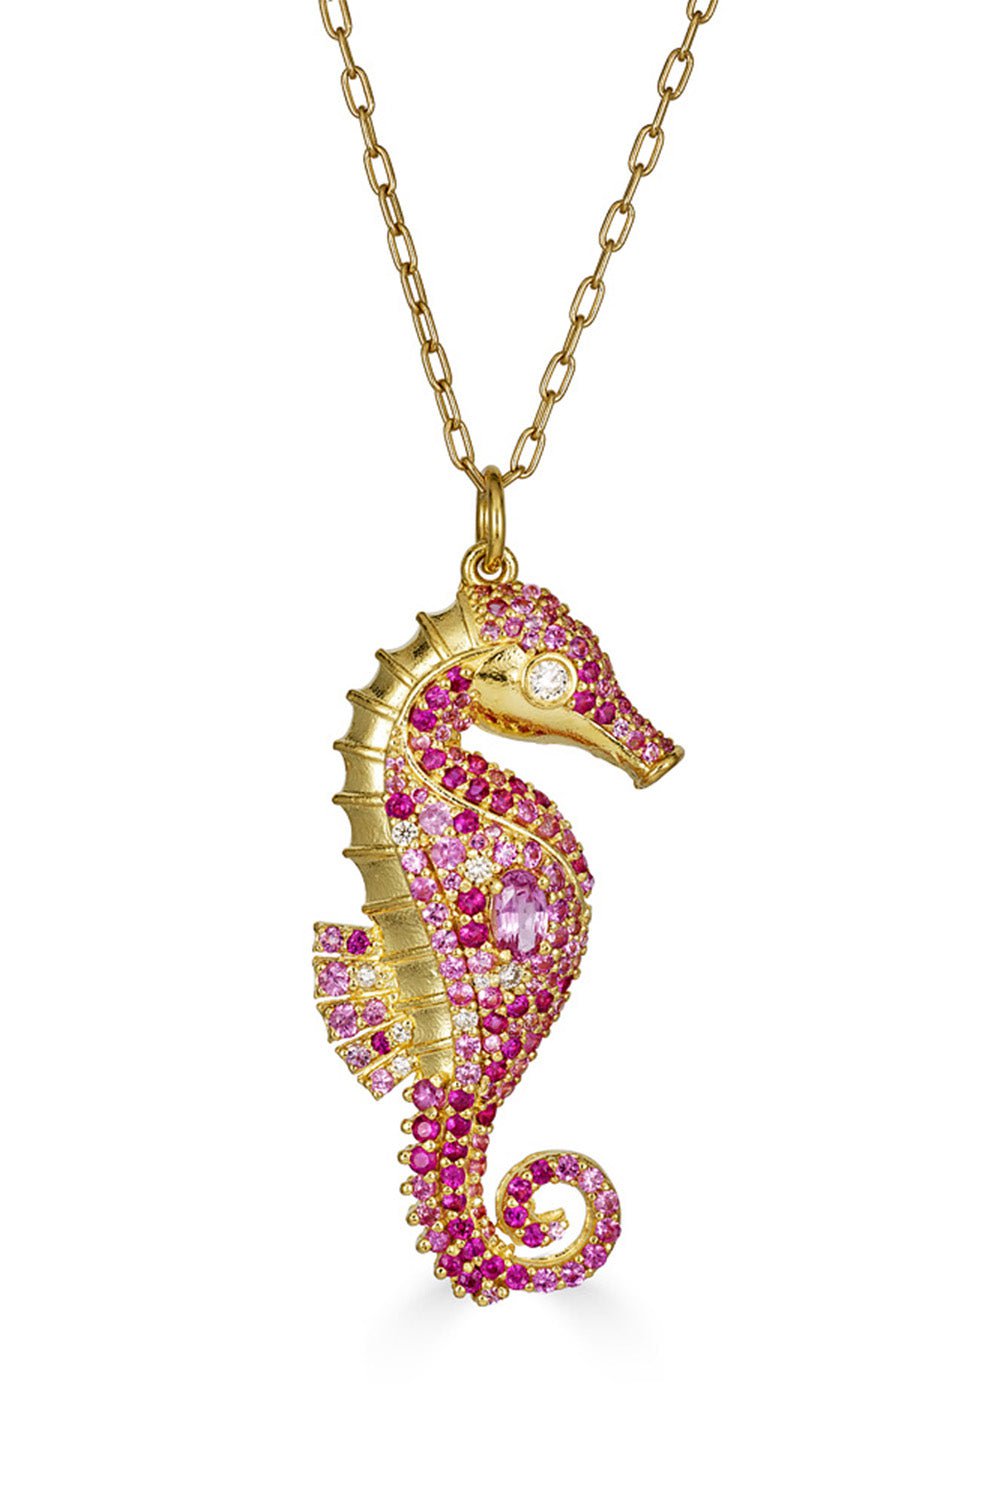 TANYA FARAH-Sapphire Seahorse Pendant Necklace-YELLOW GOLD